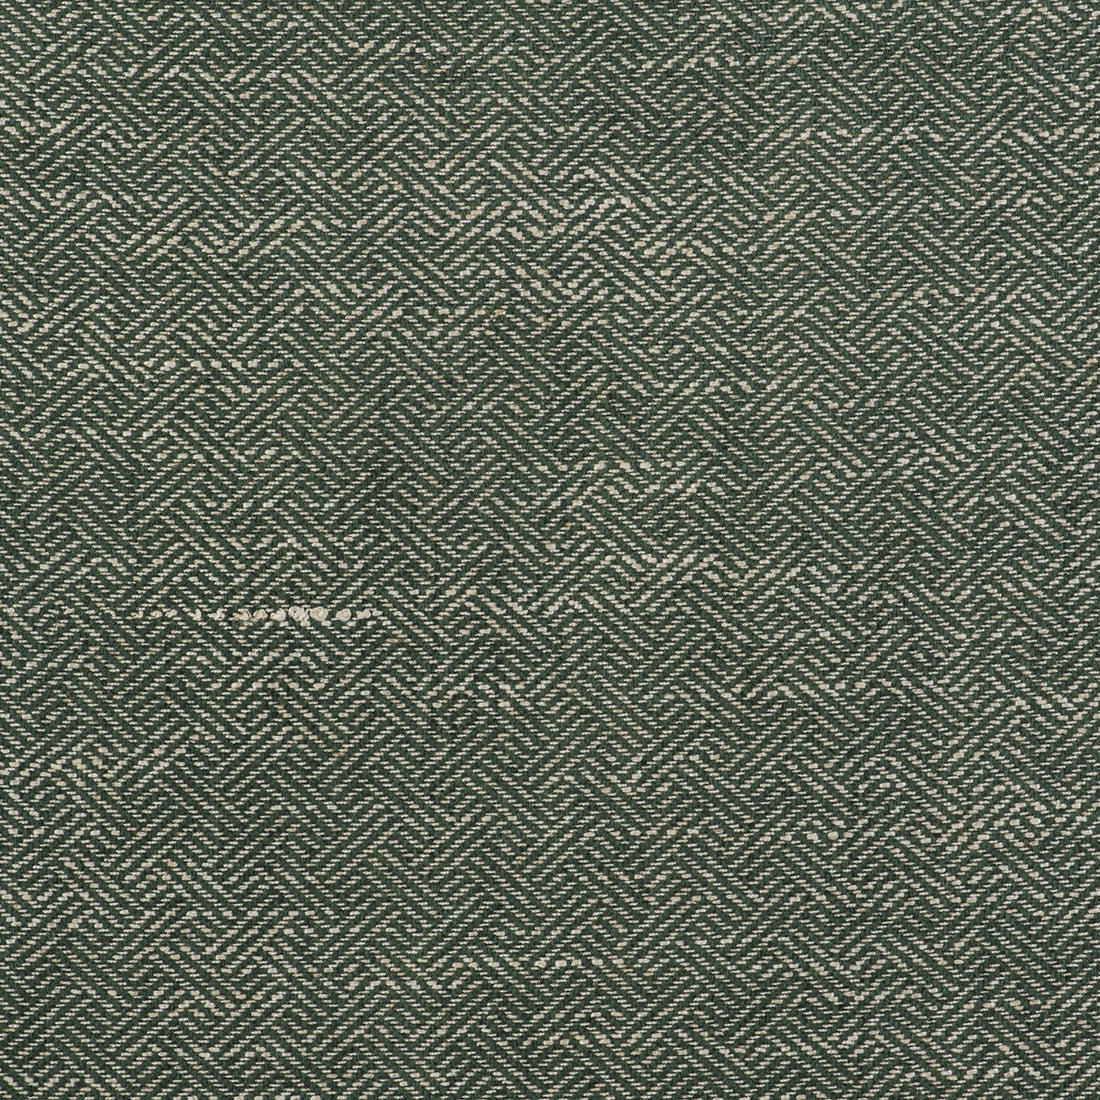 Enea fabric in verde color - pattern GDT5518.007.0 - by Gaston y Daniela in the Gaston Libreria collection